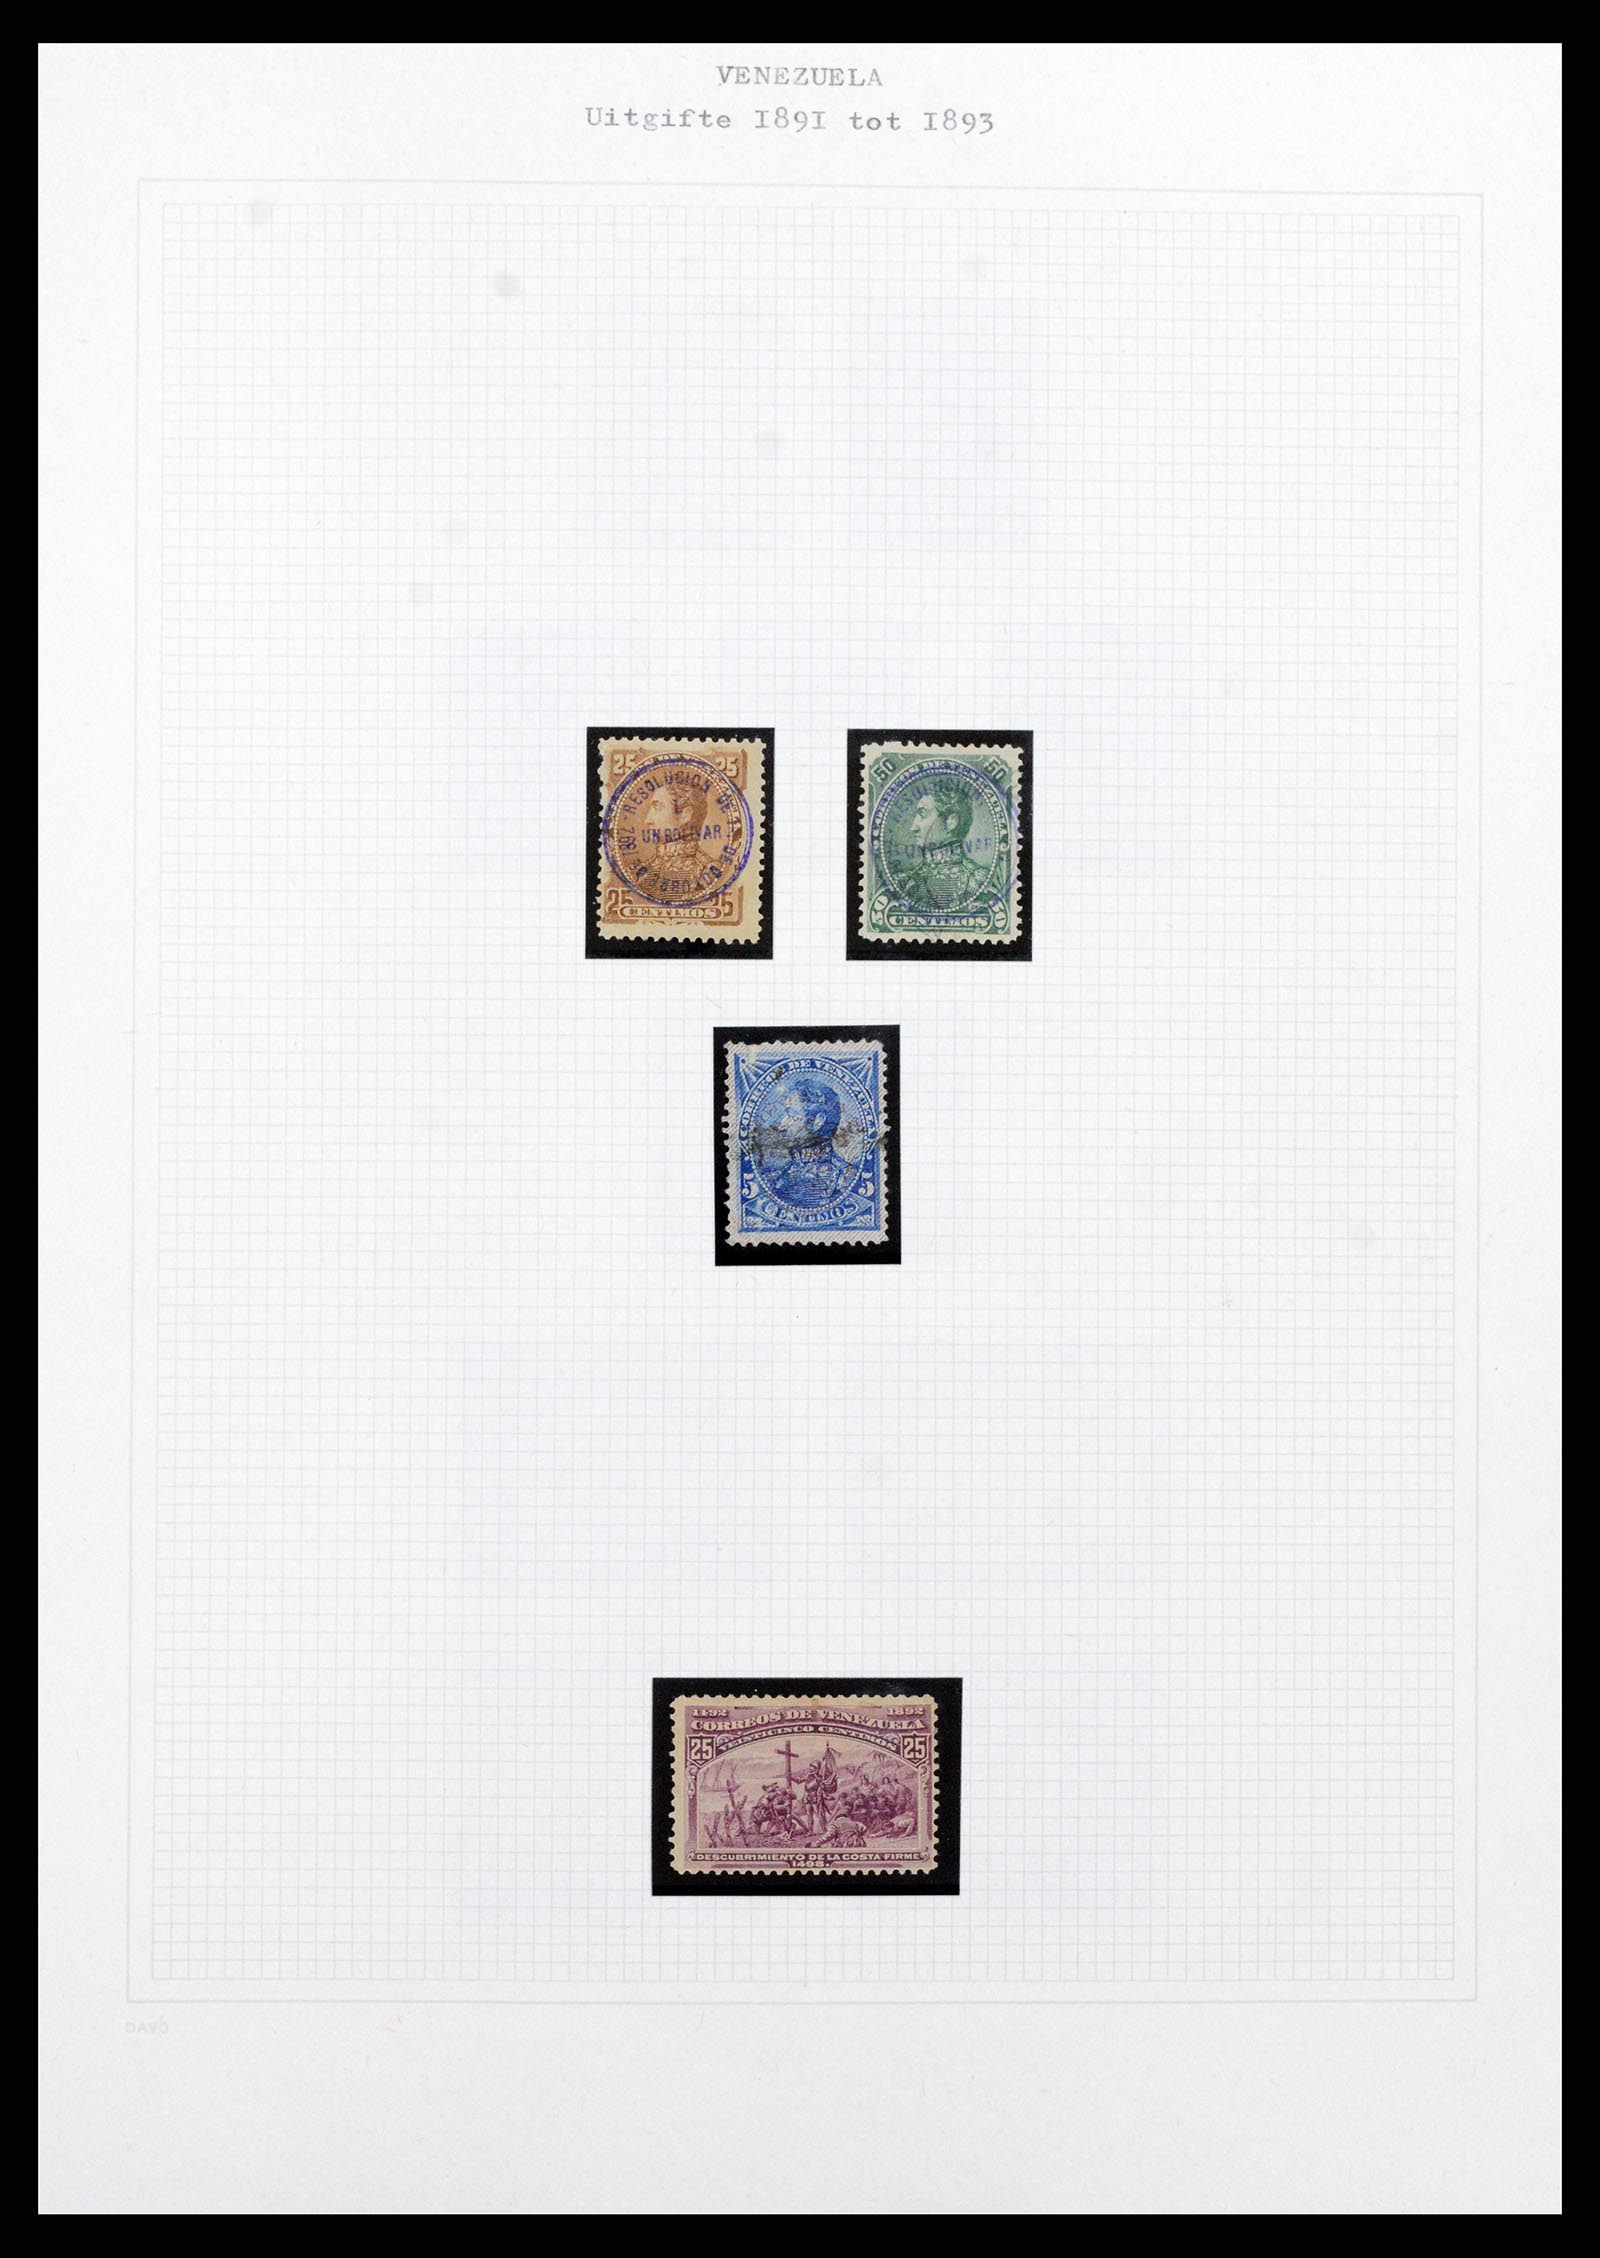 37353 002 - Stamp collection 37353 Venezuela 1880-1960.